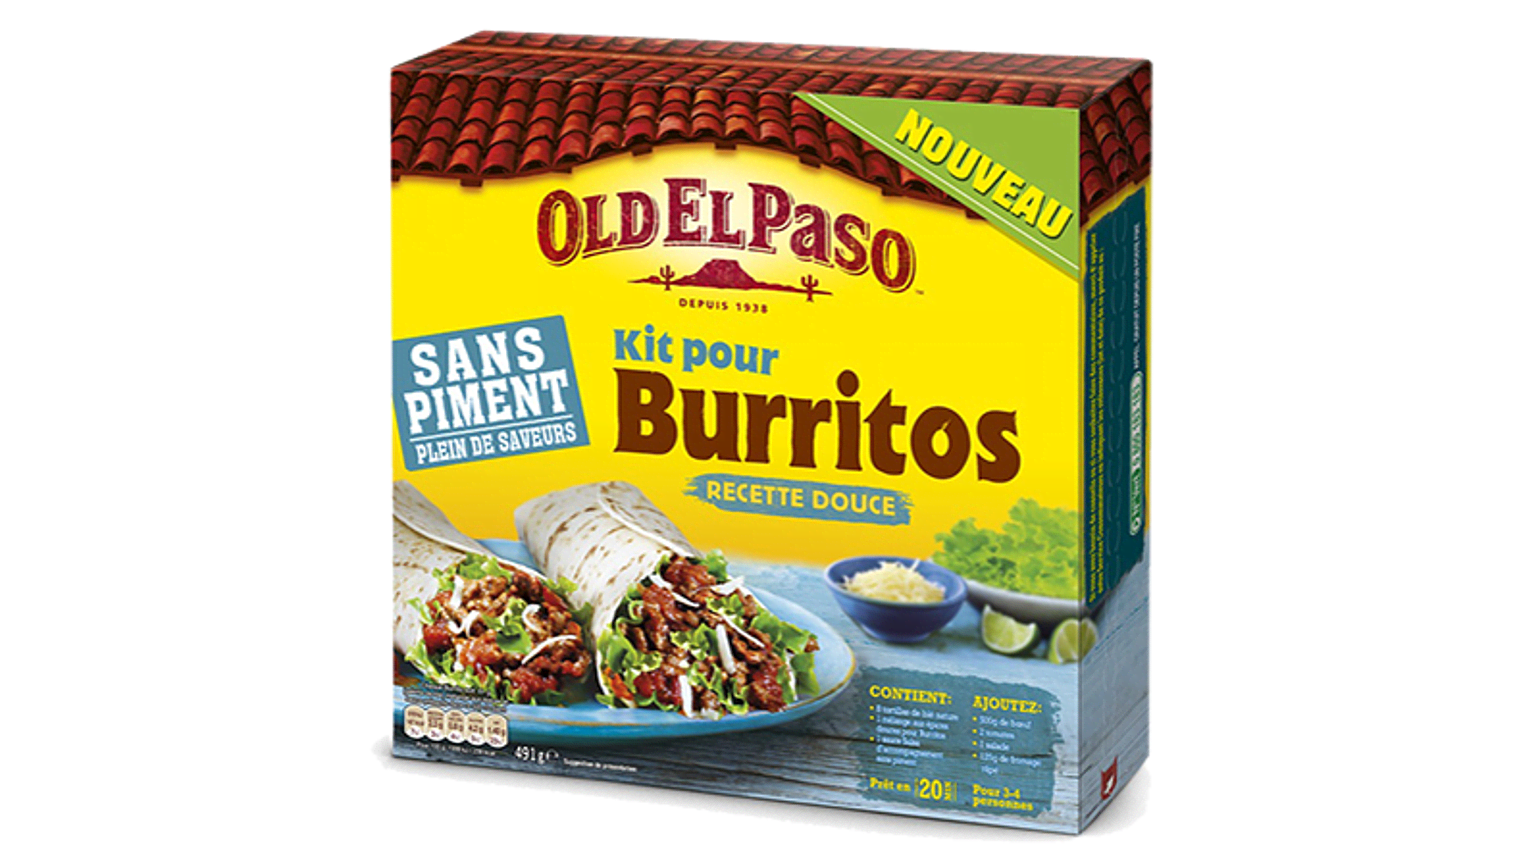 extra mild super tasty burrito kit